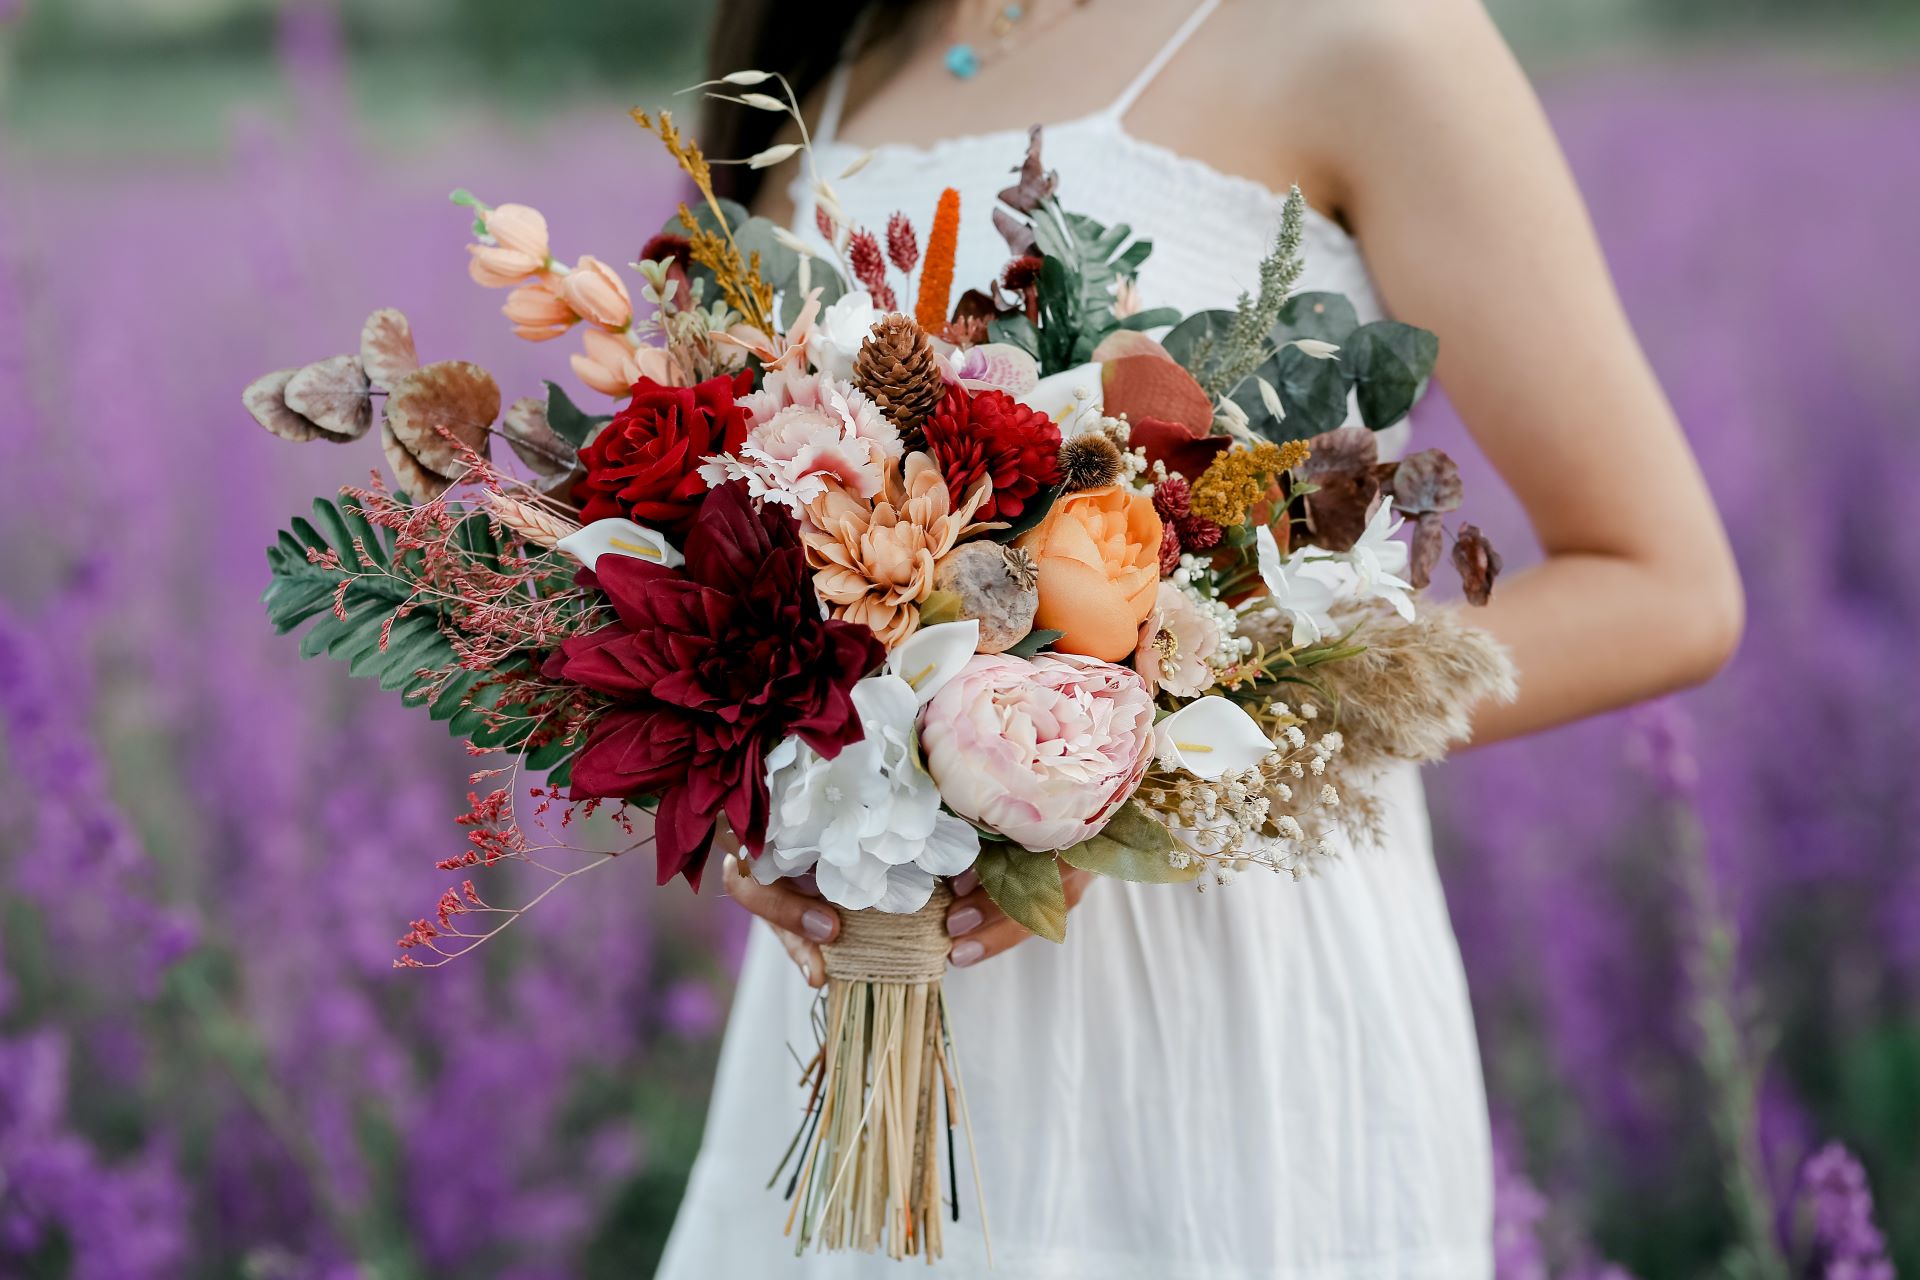 Colorful wedding bouquet in lavendar field